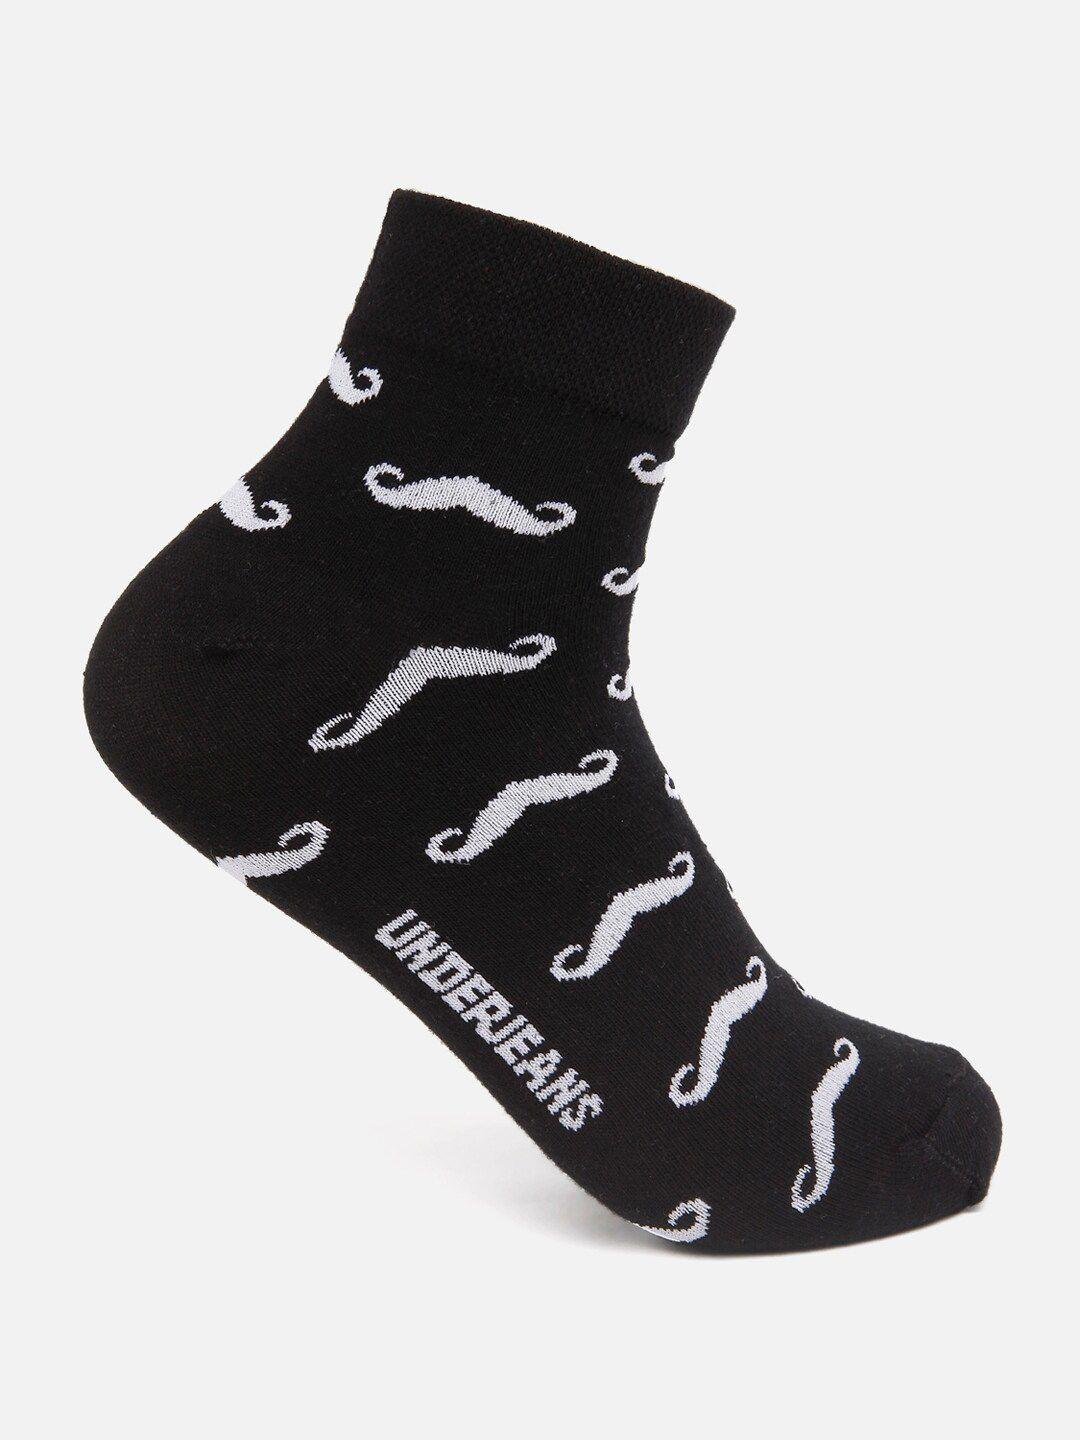 underjeans by spykar men black & white patterned cotton ankle-length socks